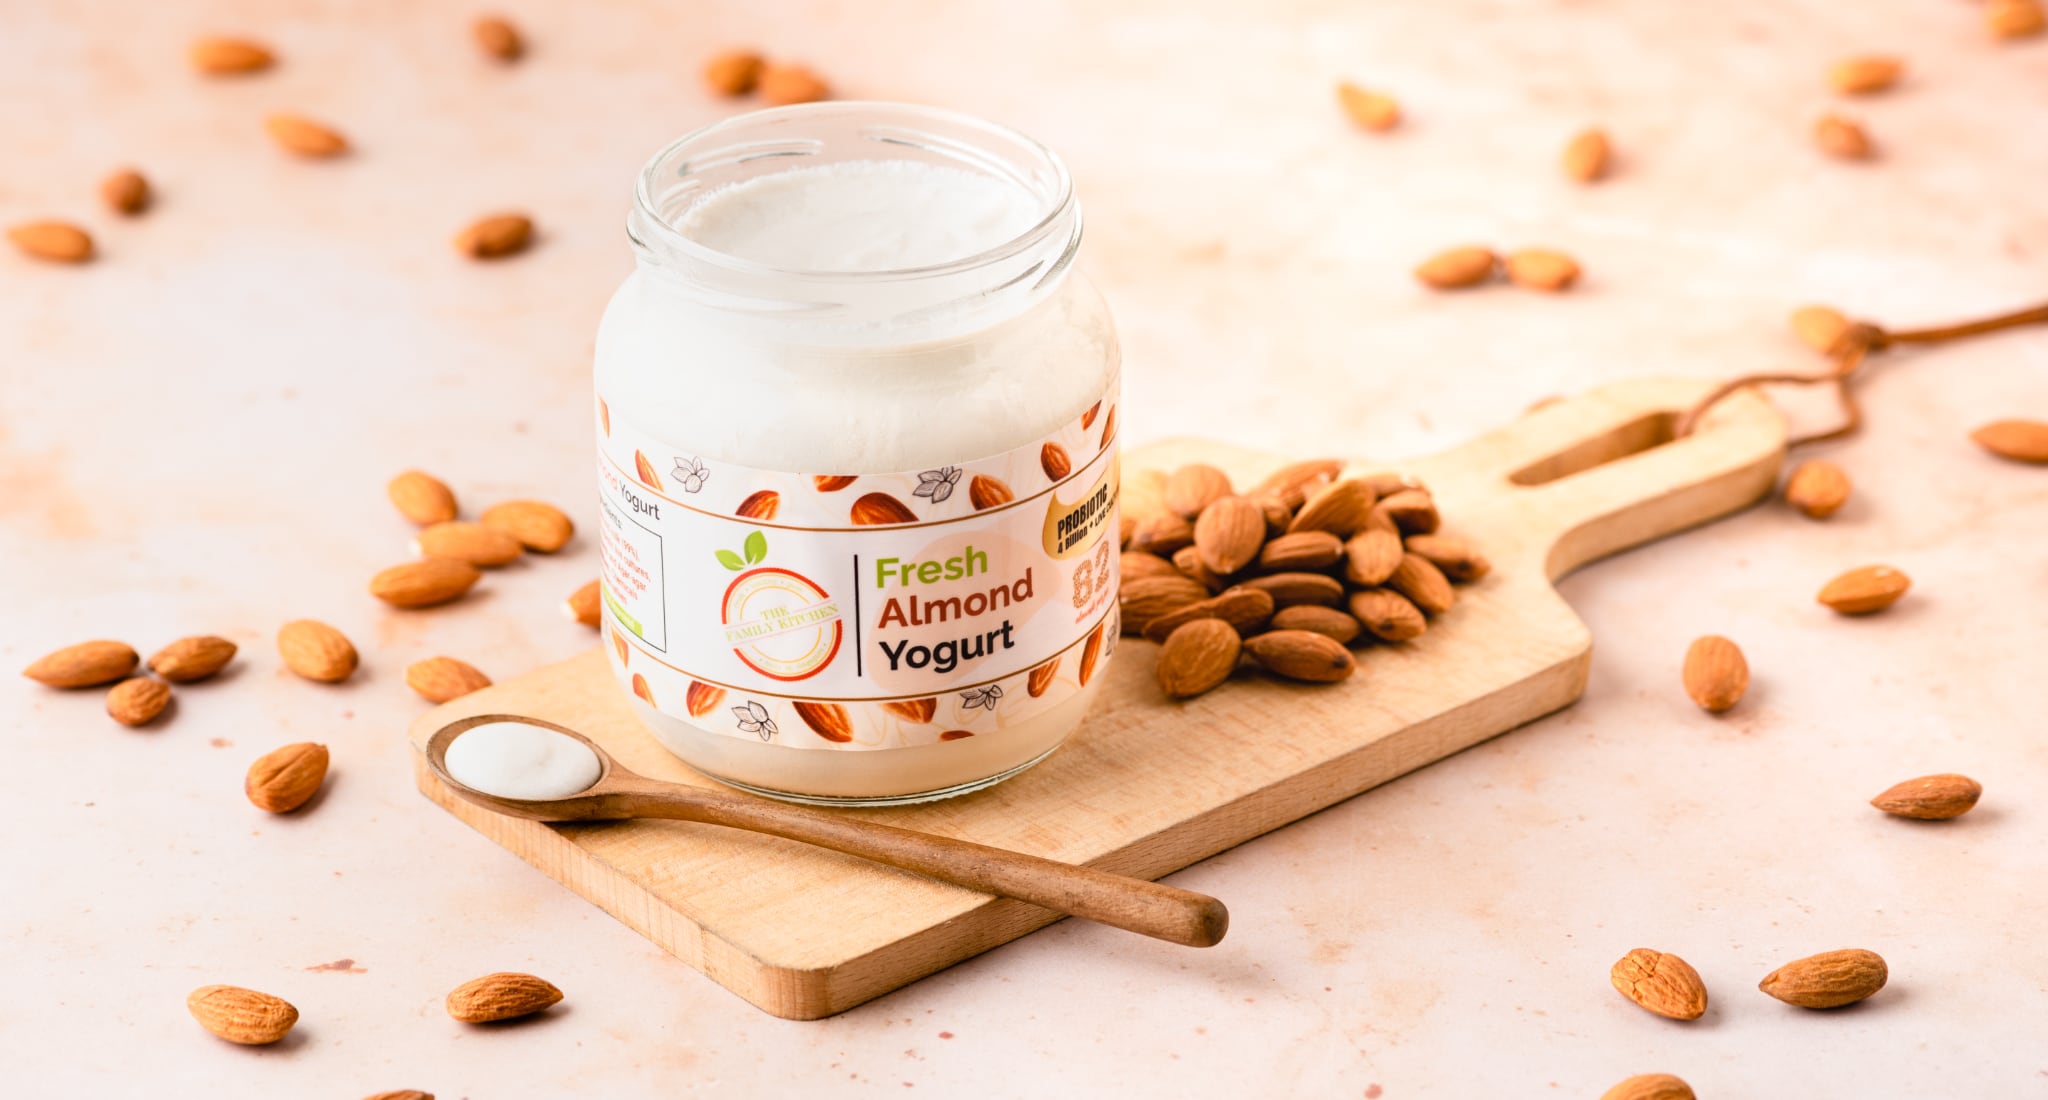 Fresh Almond Yogurt by The Family Kitchen, Singapore